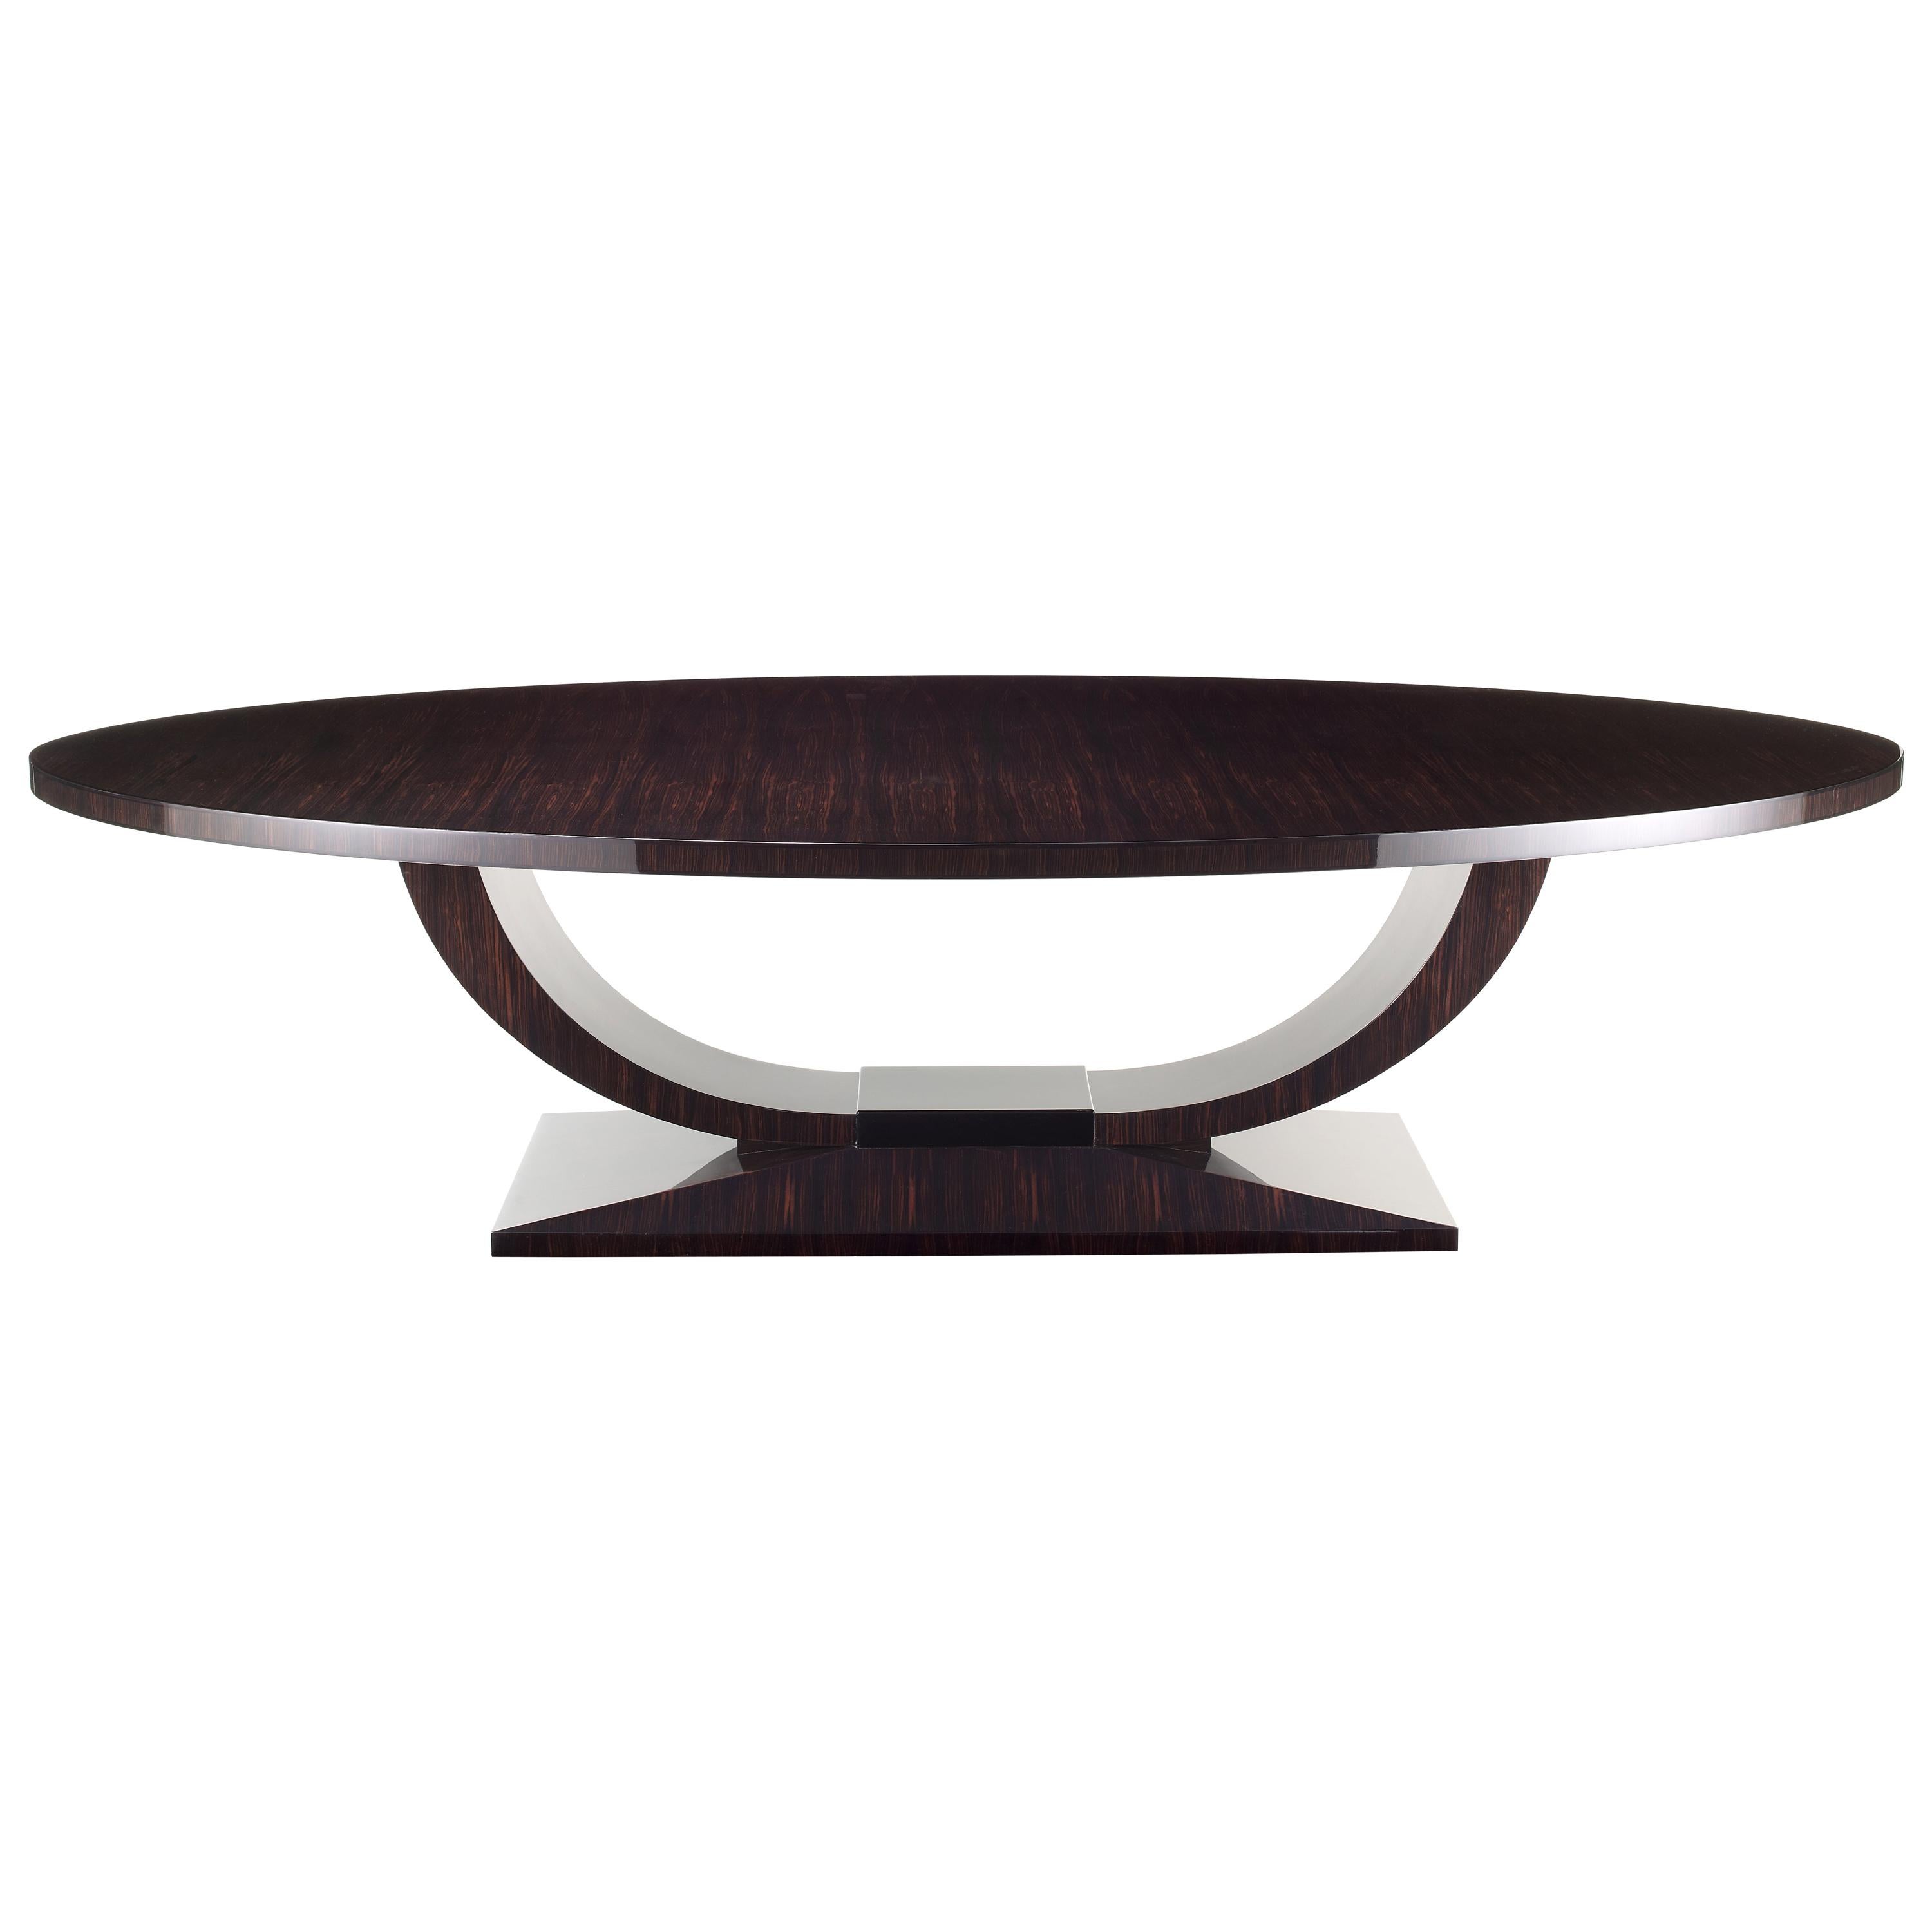 Art Deco Style Elliptical 'Ovington' Dining Table in Brown Macassar Ebony Wood